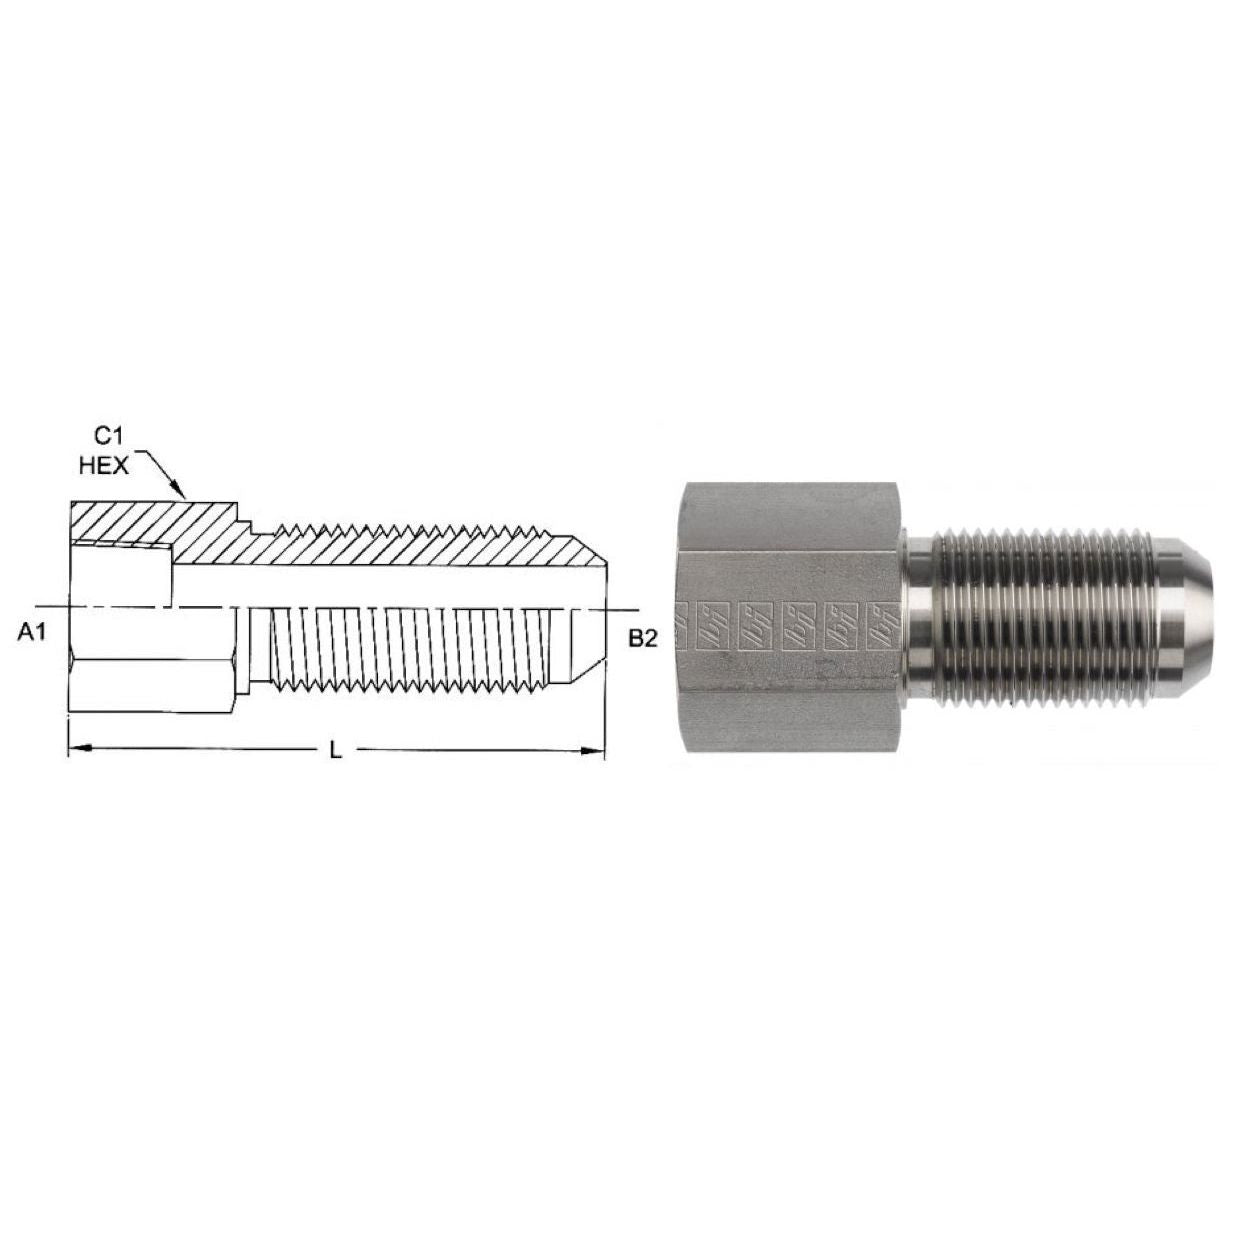 2705-06-08 : OneHydraulics Bulkhead Adapter, Straight, 0.375 (3/8") JIC JIC x 0.5 (1/2") Male, Steel, 6000psi